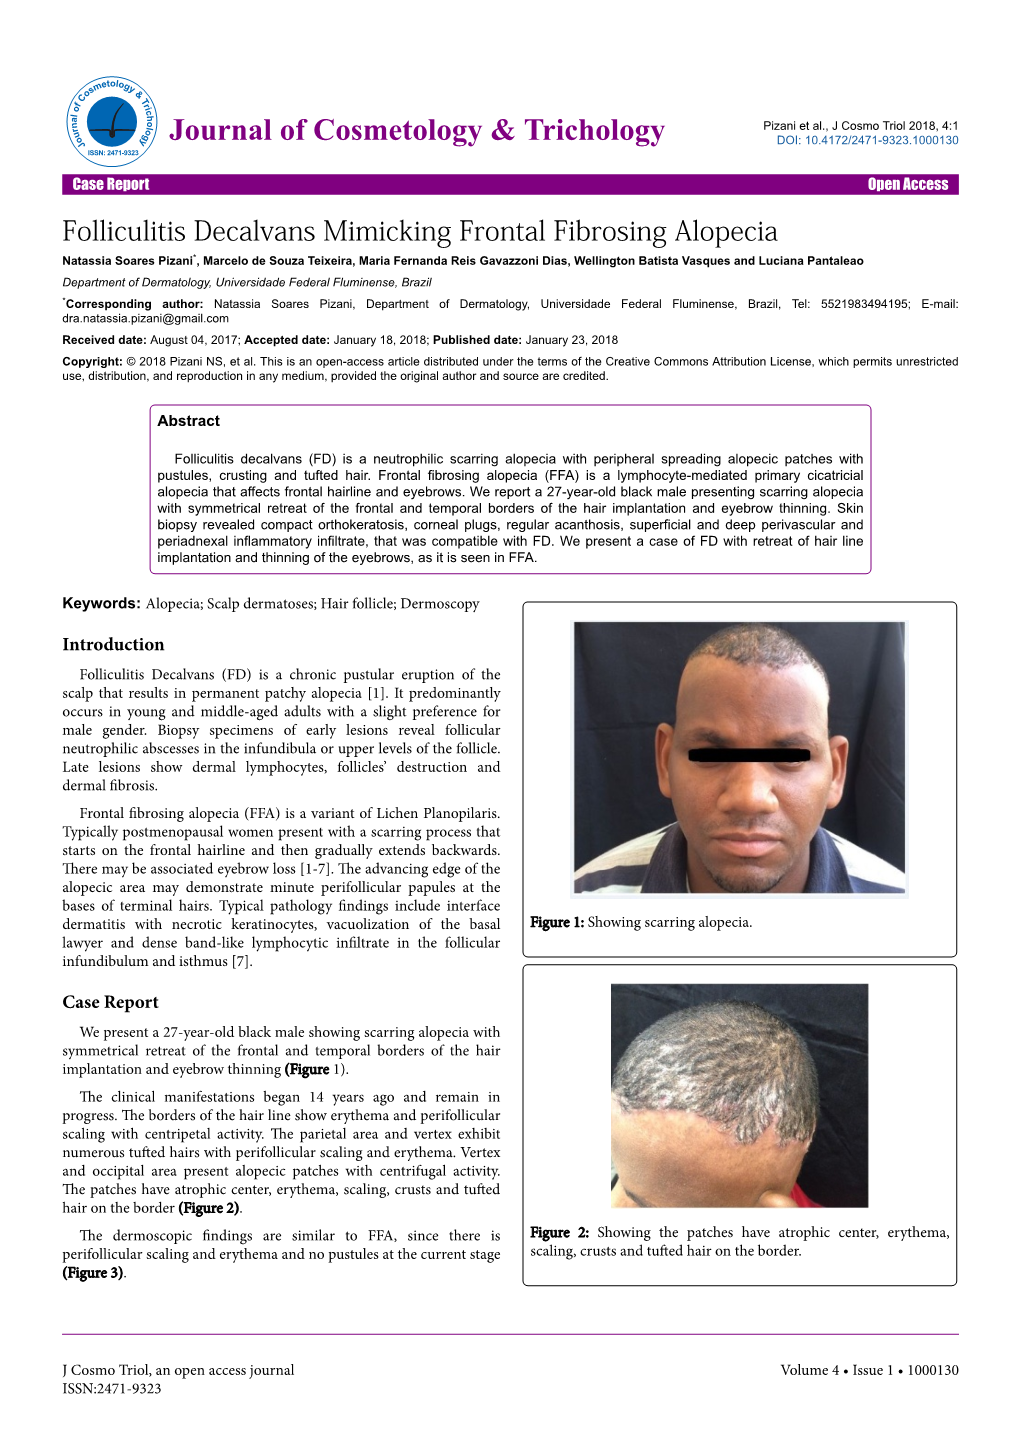 Folliculitis Decalvans Mimicking Frontal Fibrosing Alopecia